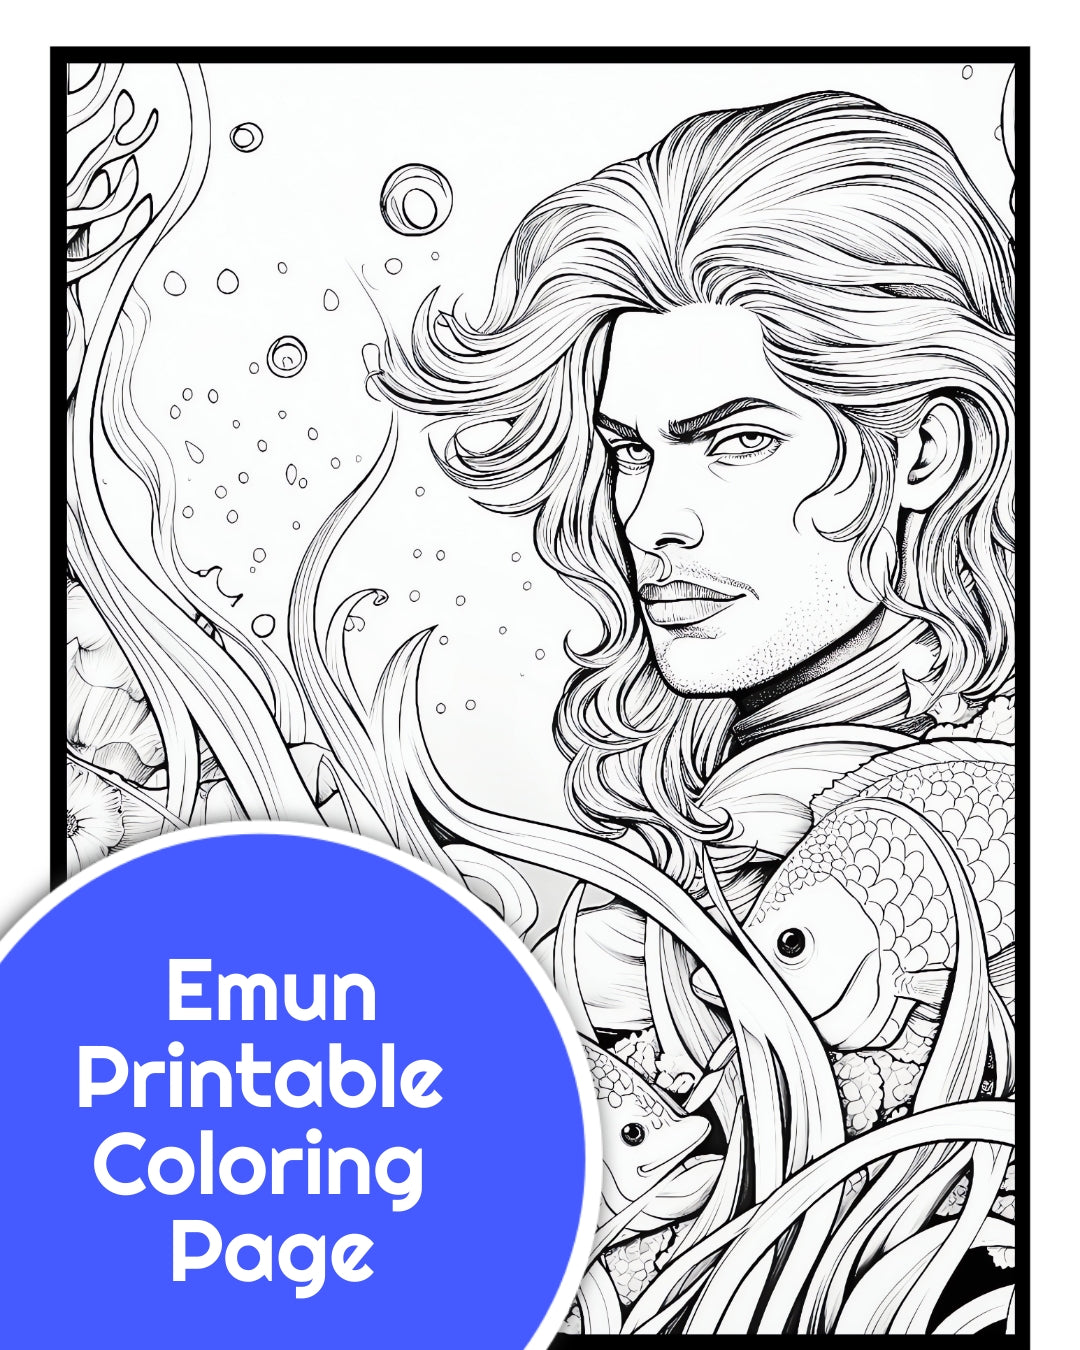 Emun printable coloring page